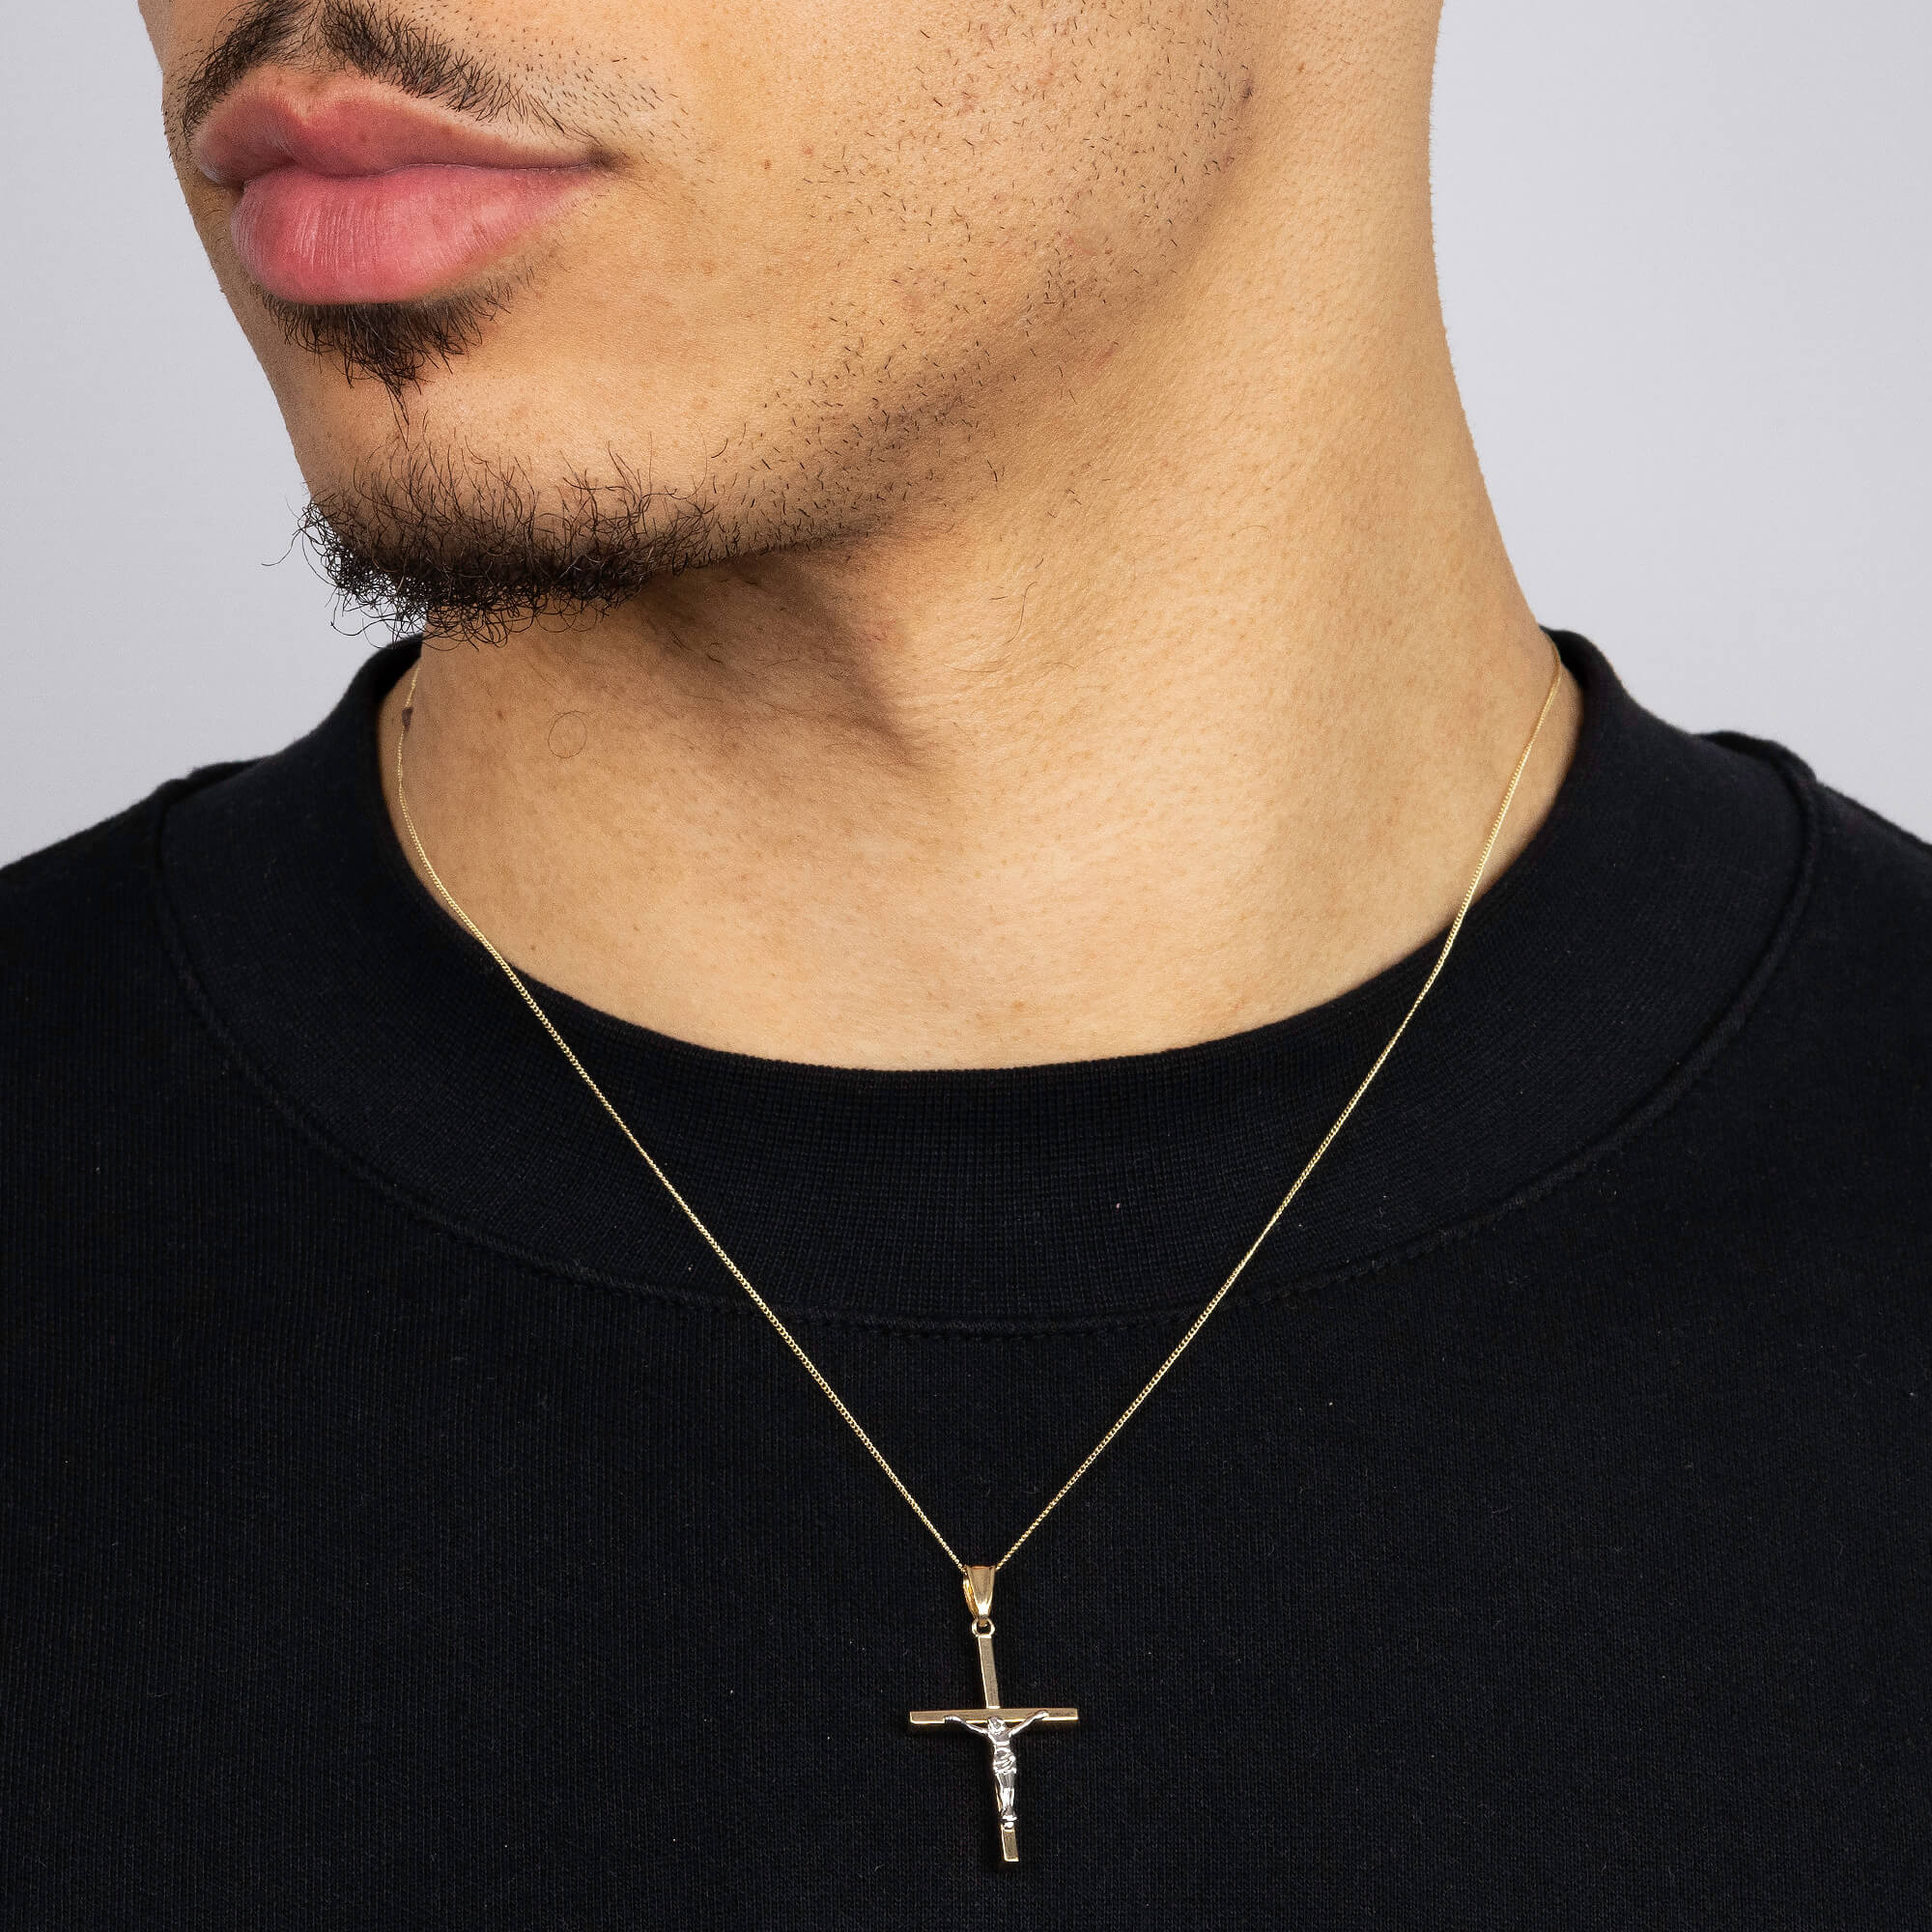 Crucifix Necklace - Cross Pendant Necklace Of 14K Gold